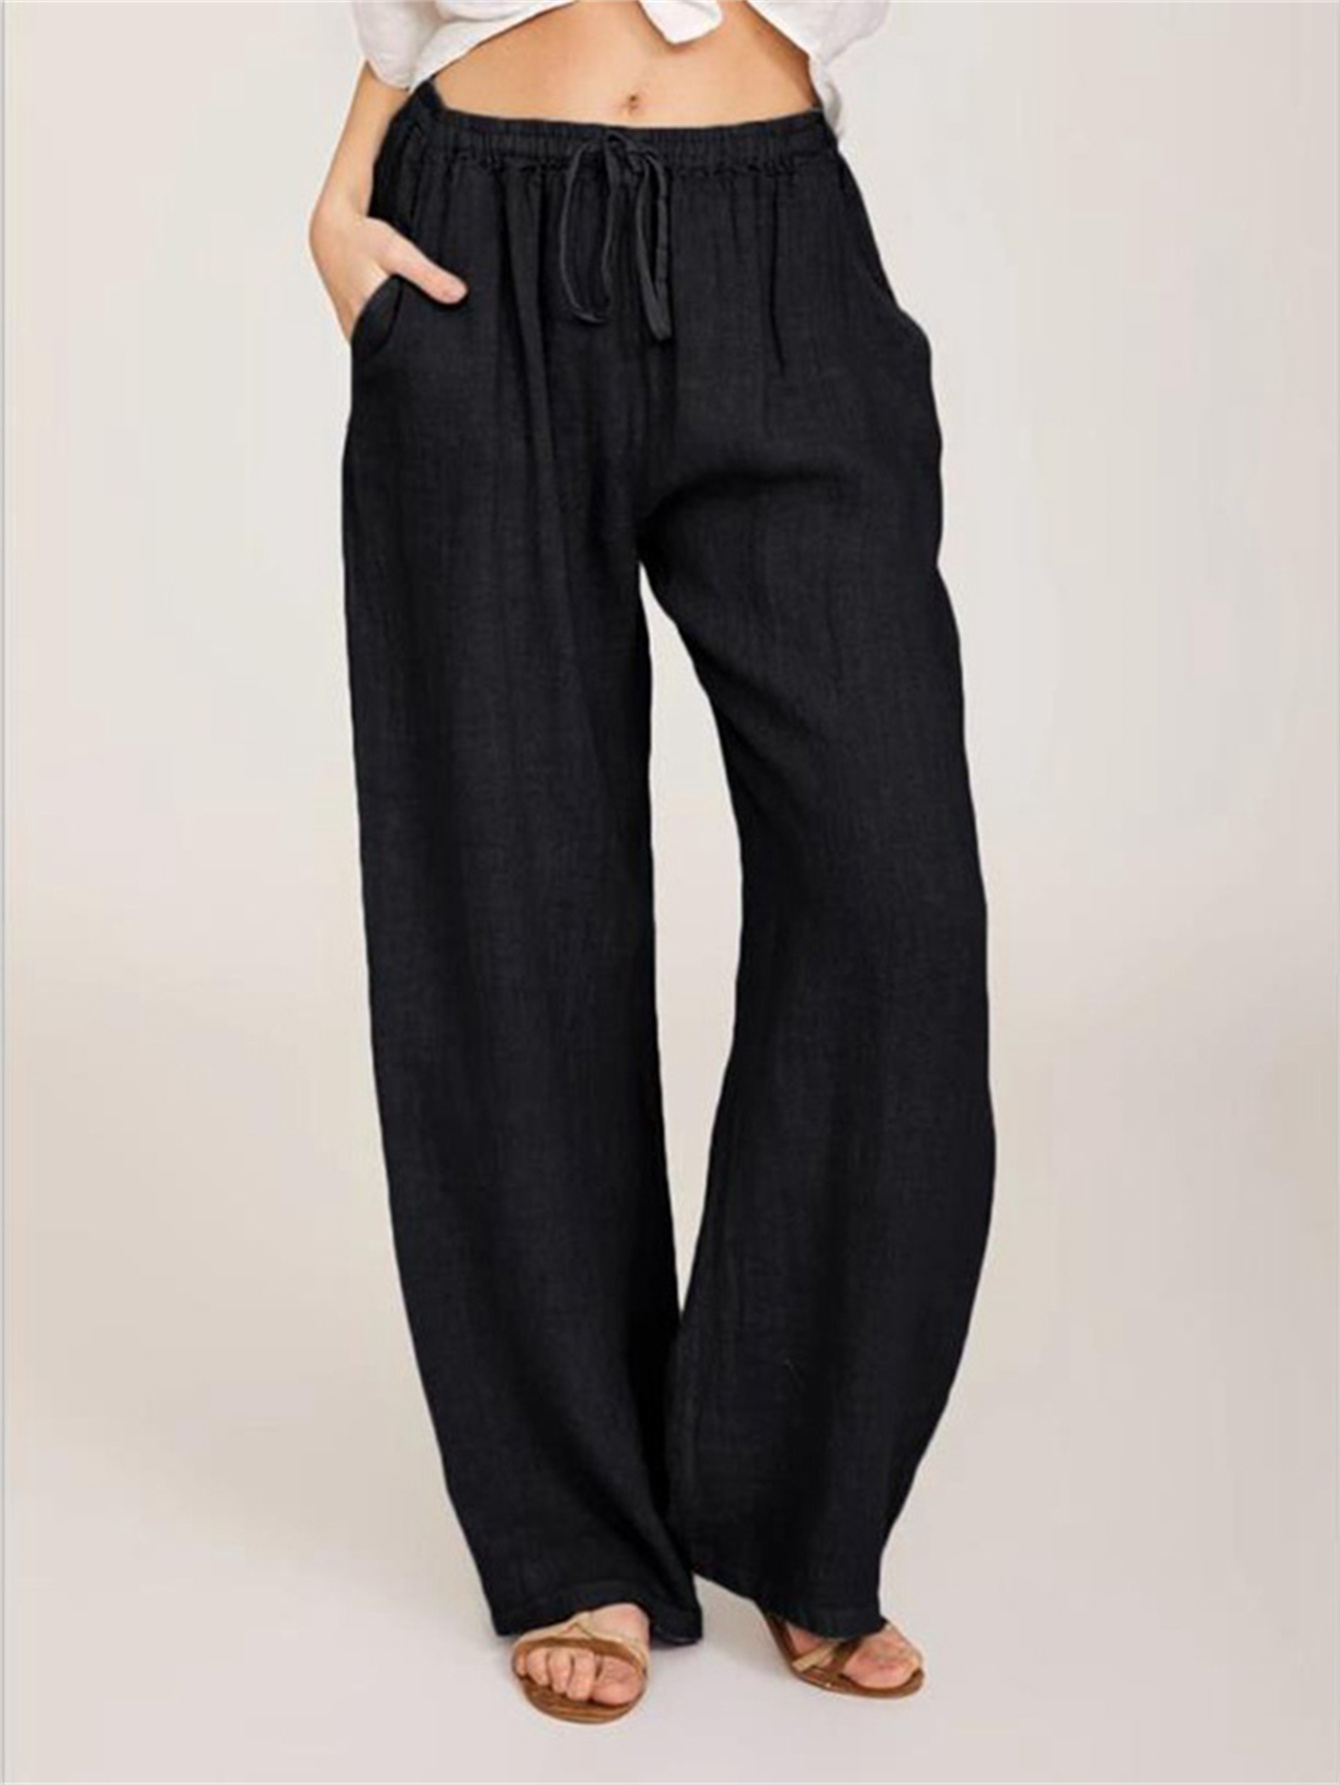 Black Chain Flare Pants Women Trousers Korean Fashion Casual Office Lady  Split High Waist Long Bell Bottom Pants Y2k Clothes - Pants & Capris -  AliExpress